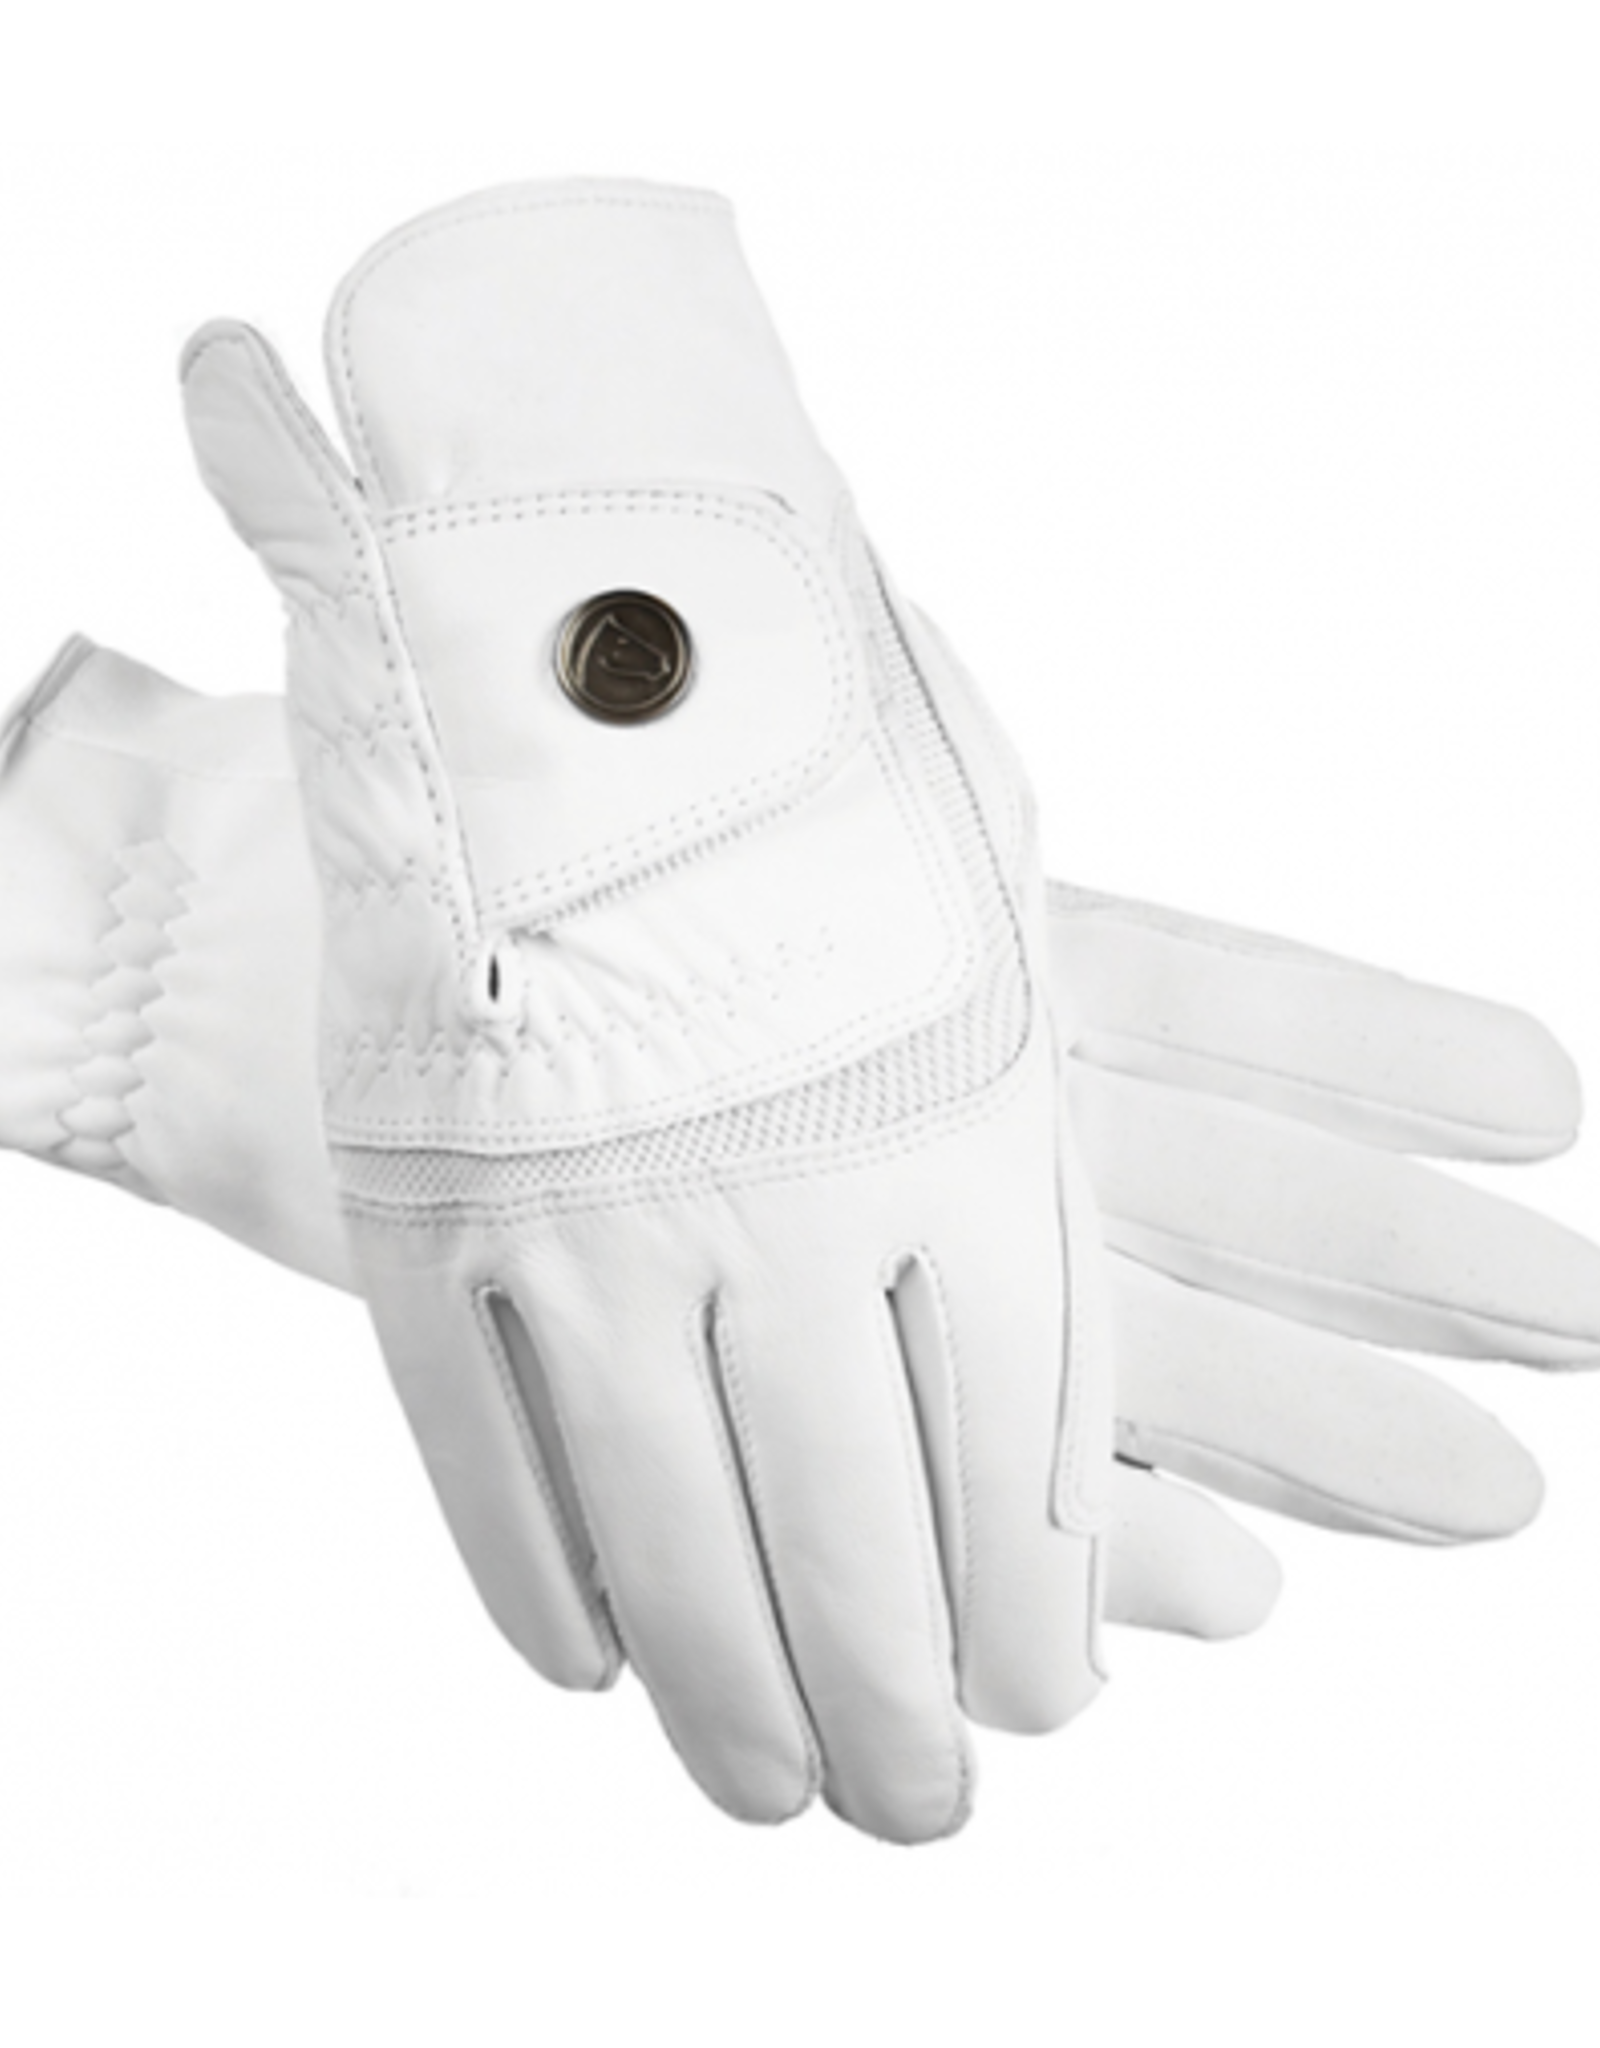 SSG Hybrid Extreme Gloves